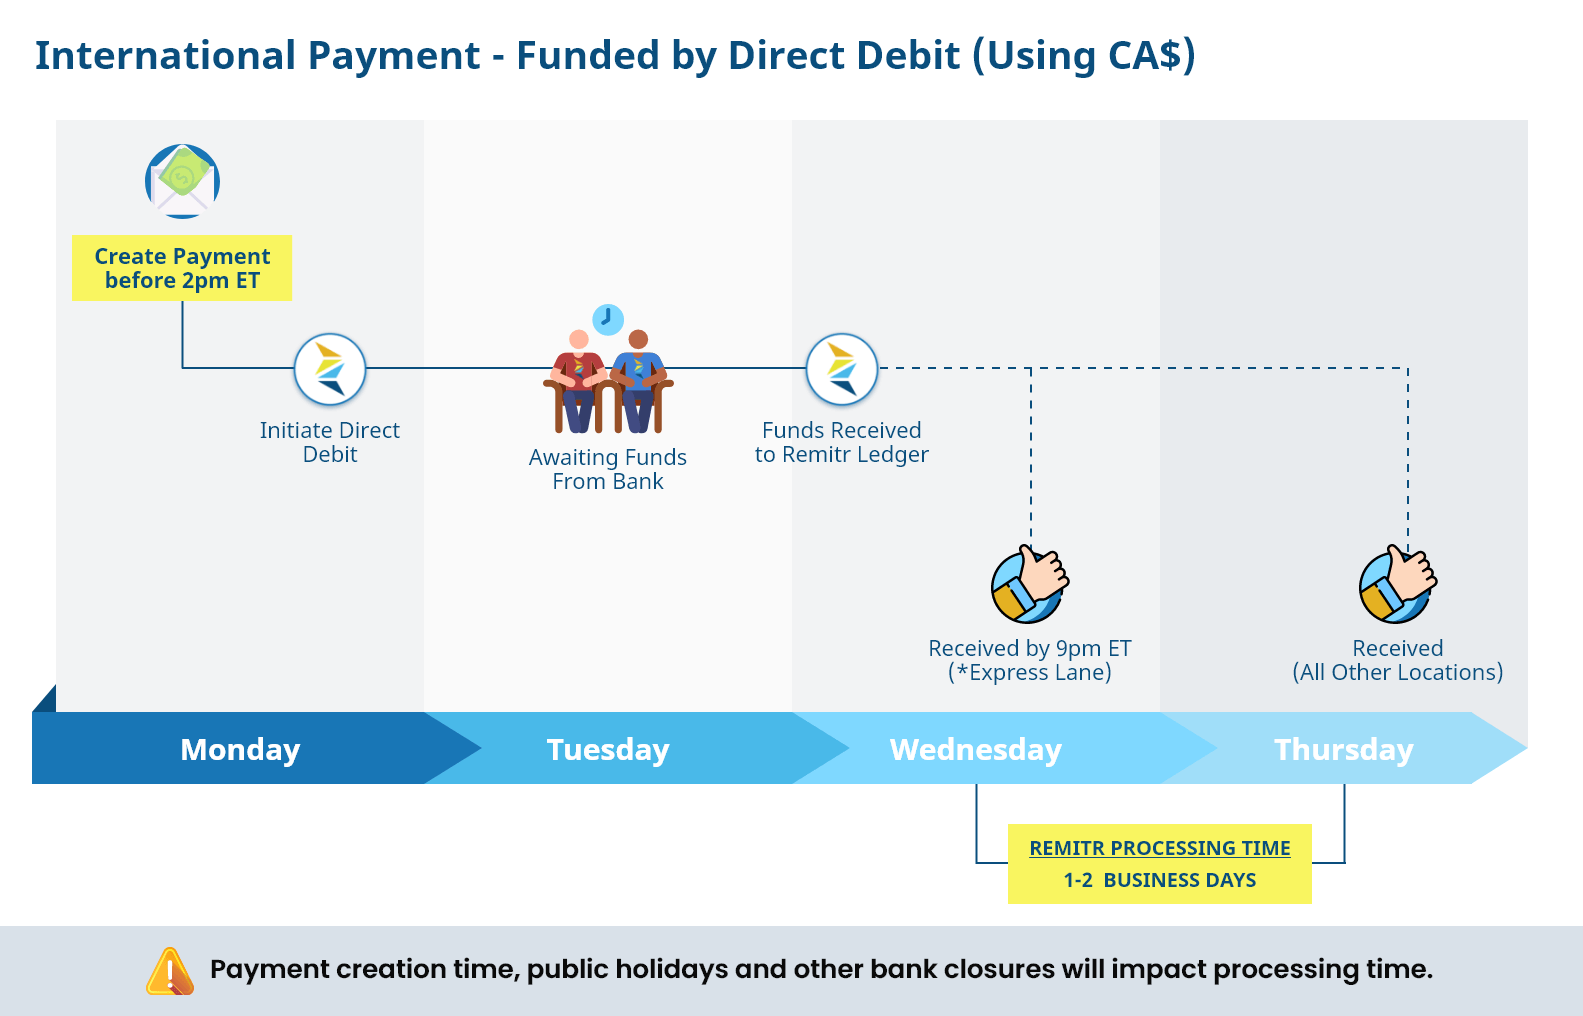 REmitr international direct debit using CAD